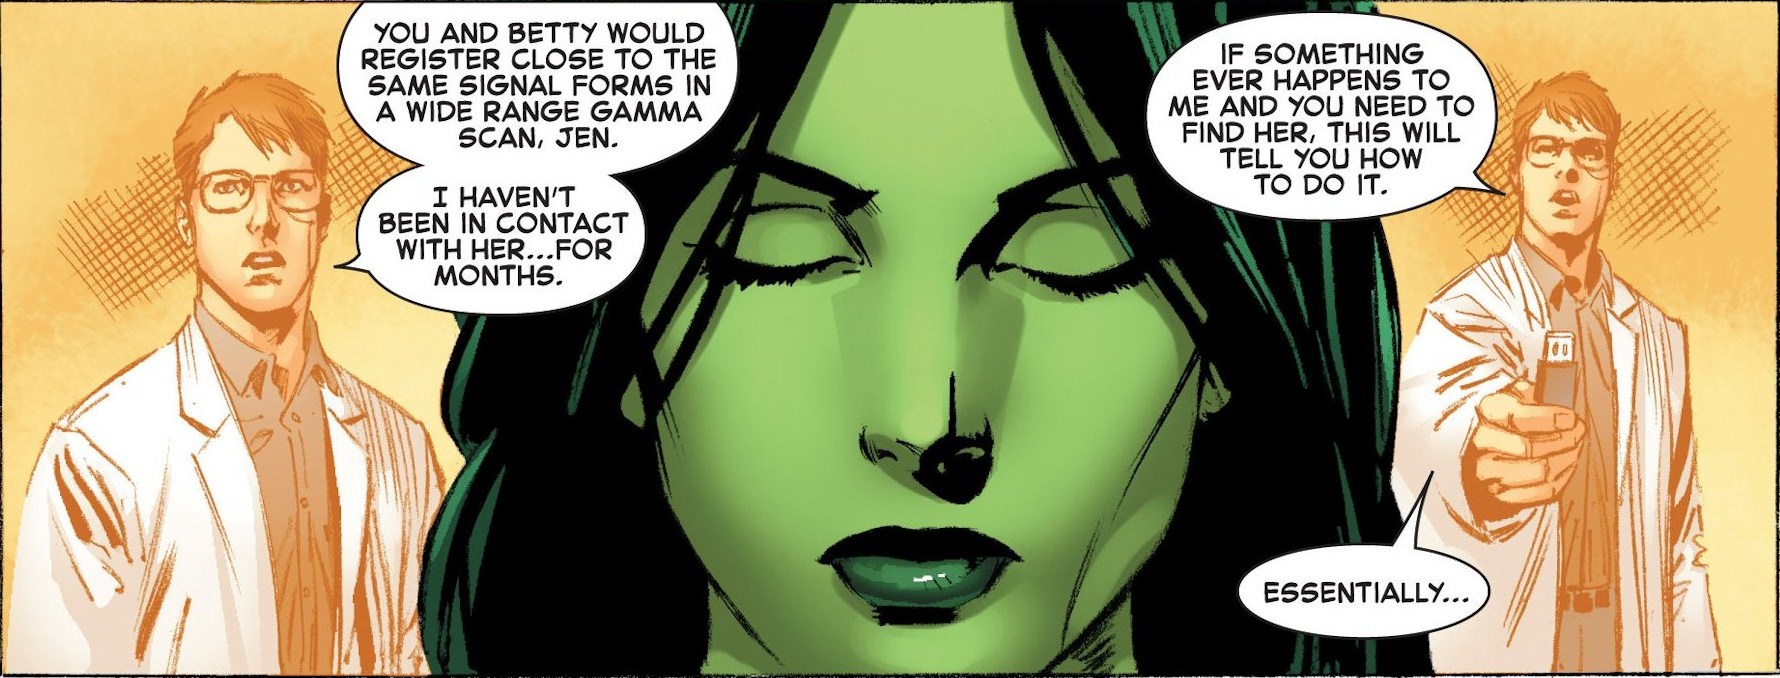 StarFox Seduces She-Hulk & Has Slept With Her 